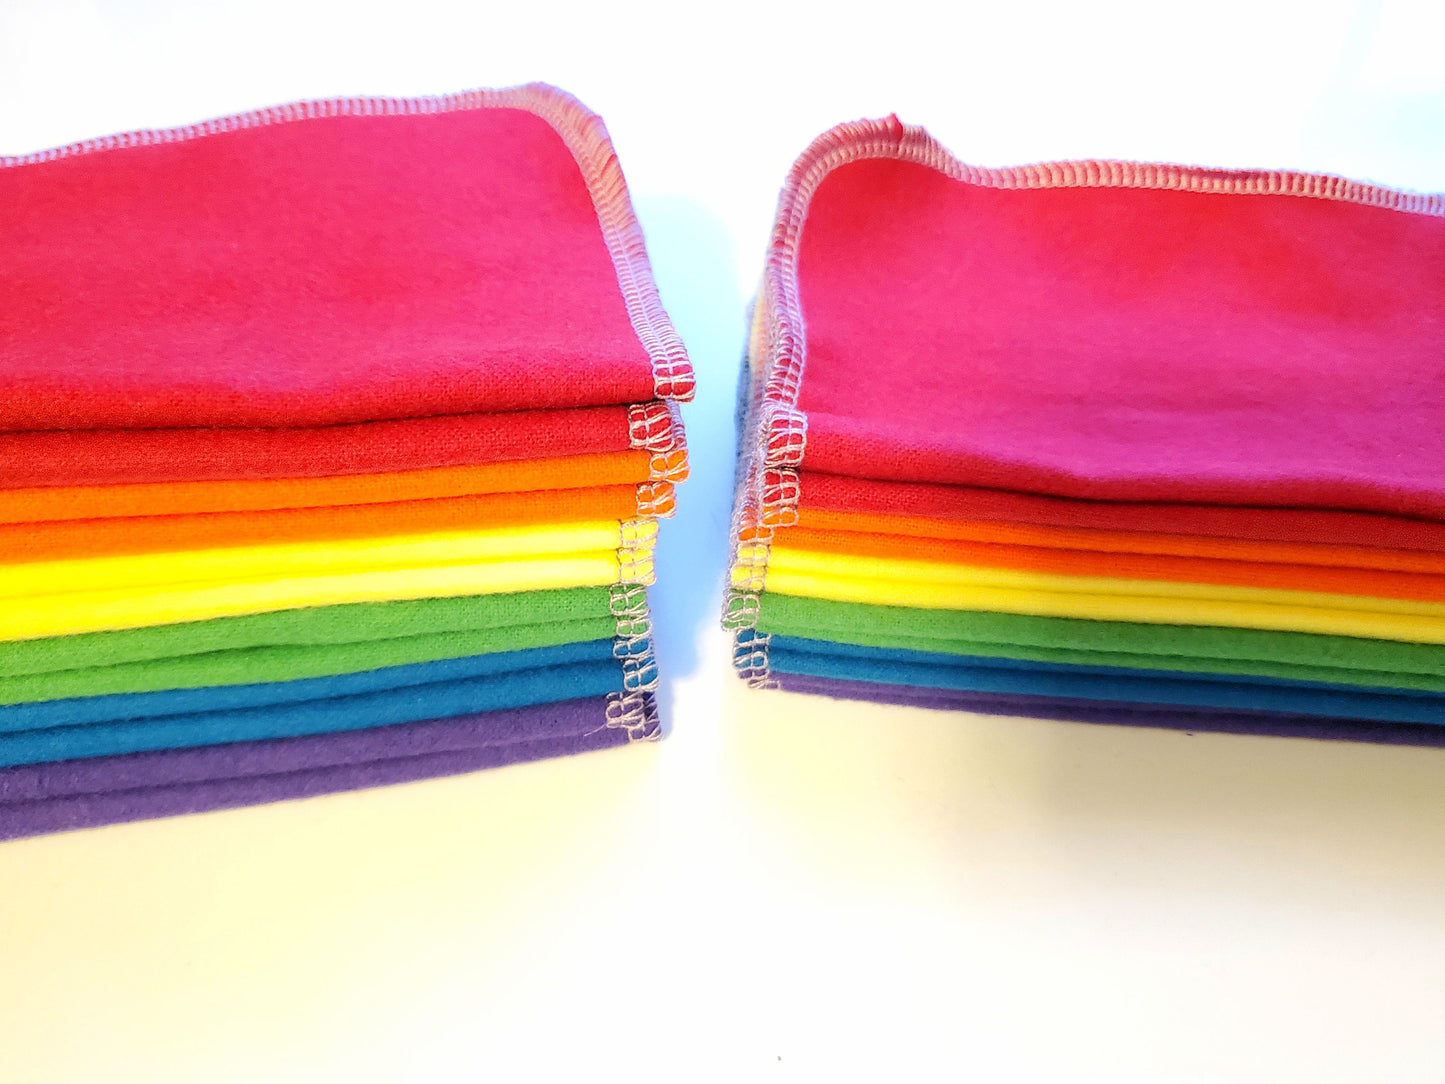 Rainbow Solid Cloth Wipes